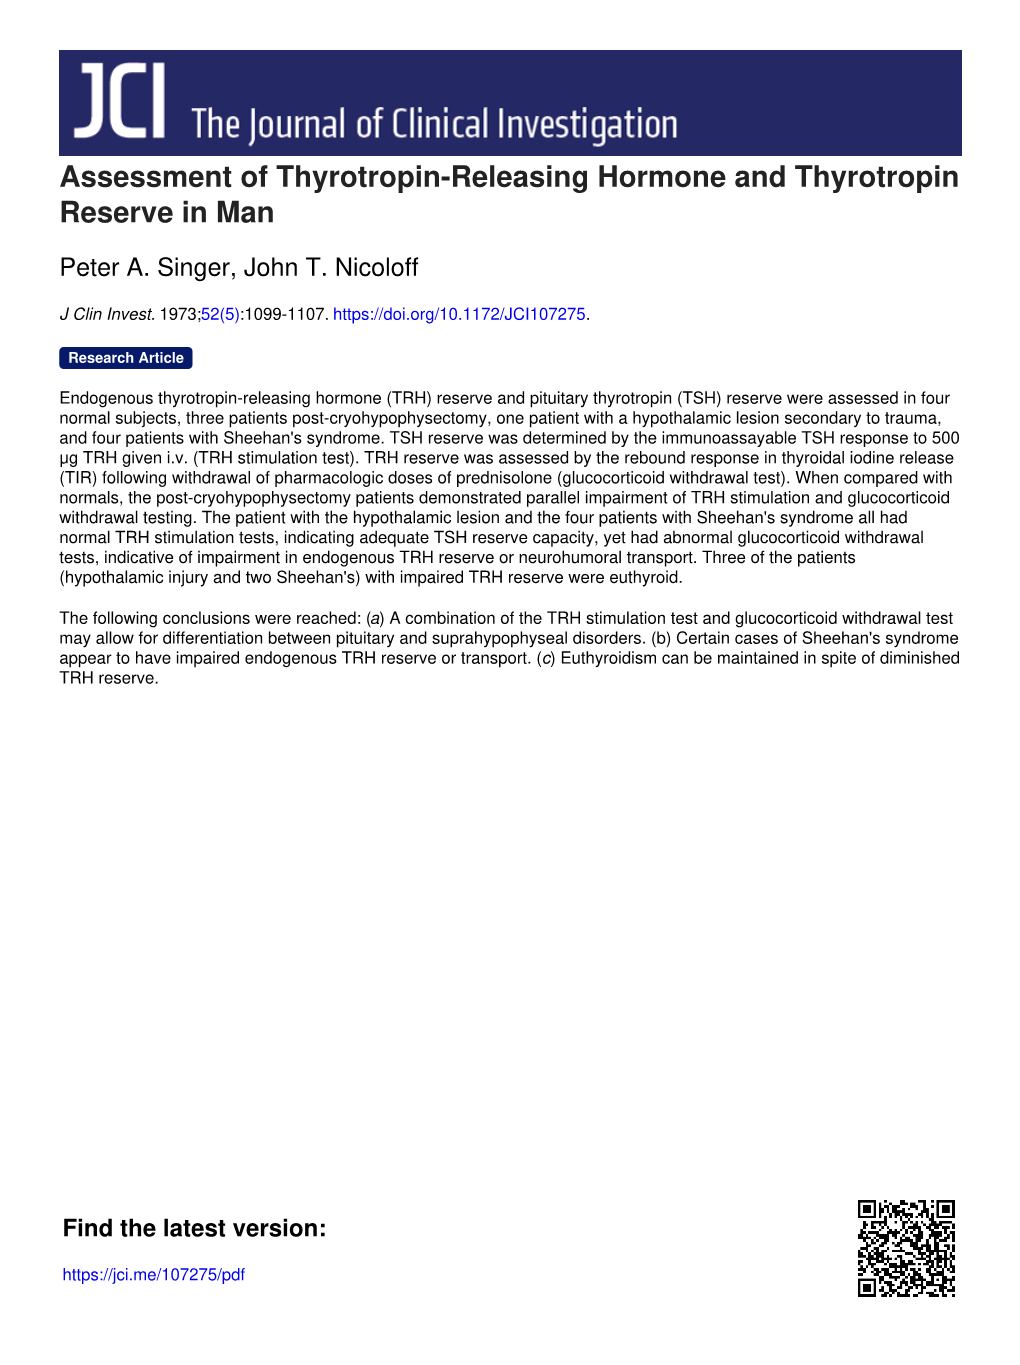 Assessment of Thyrotropin-Releasing Hormone and Thyrotropin Reserve in Man